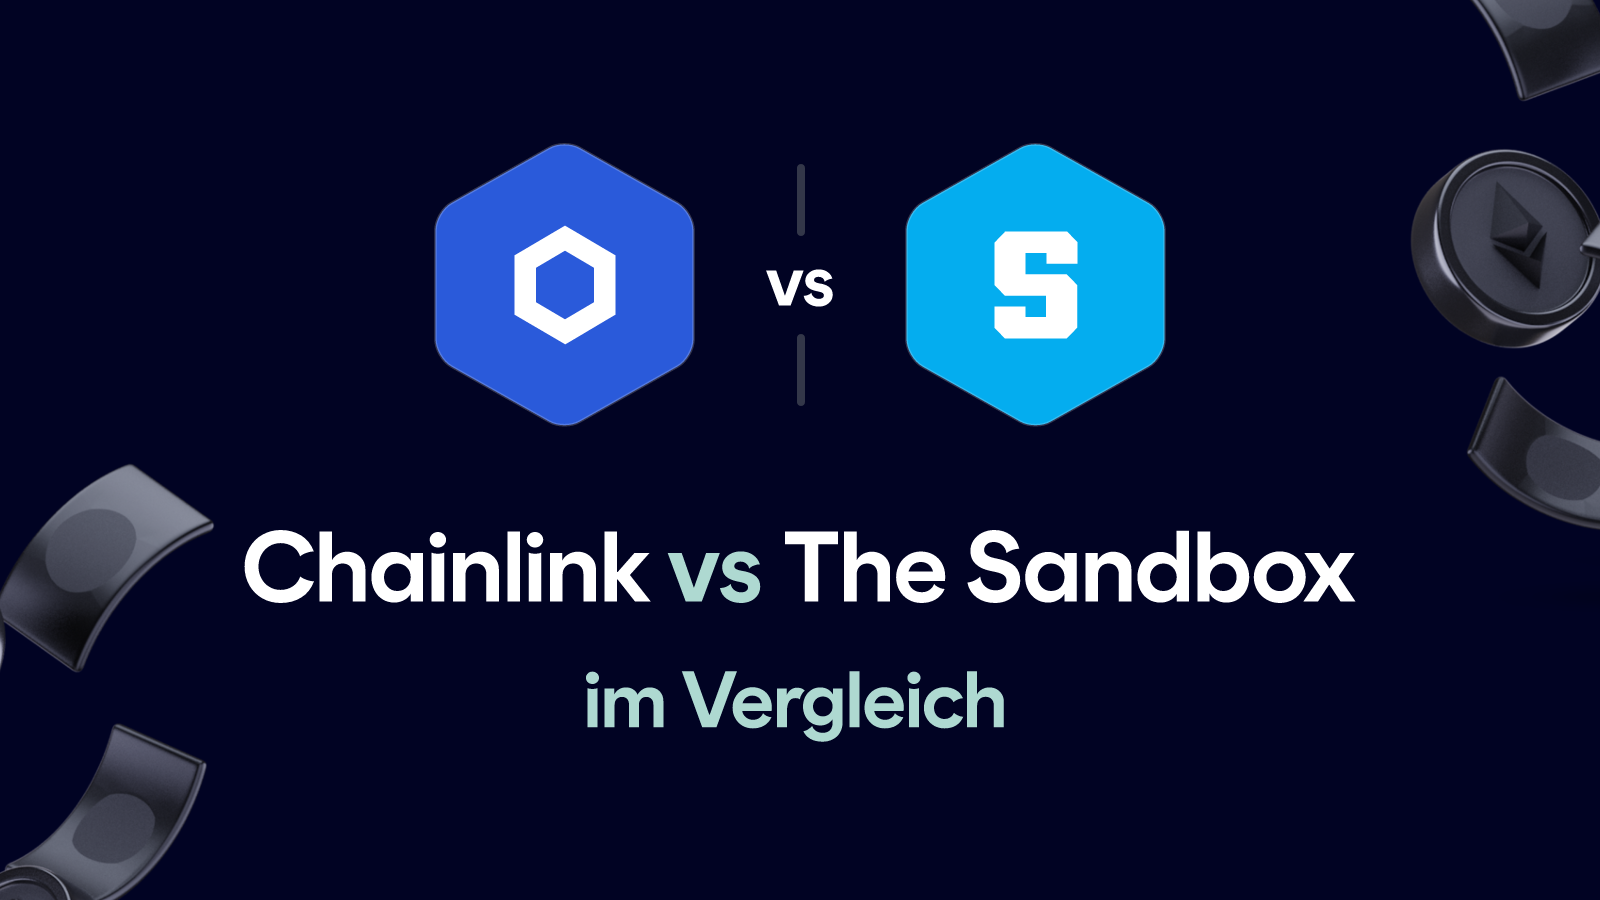 Chainlink vs The Sandbox